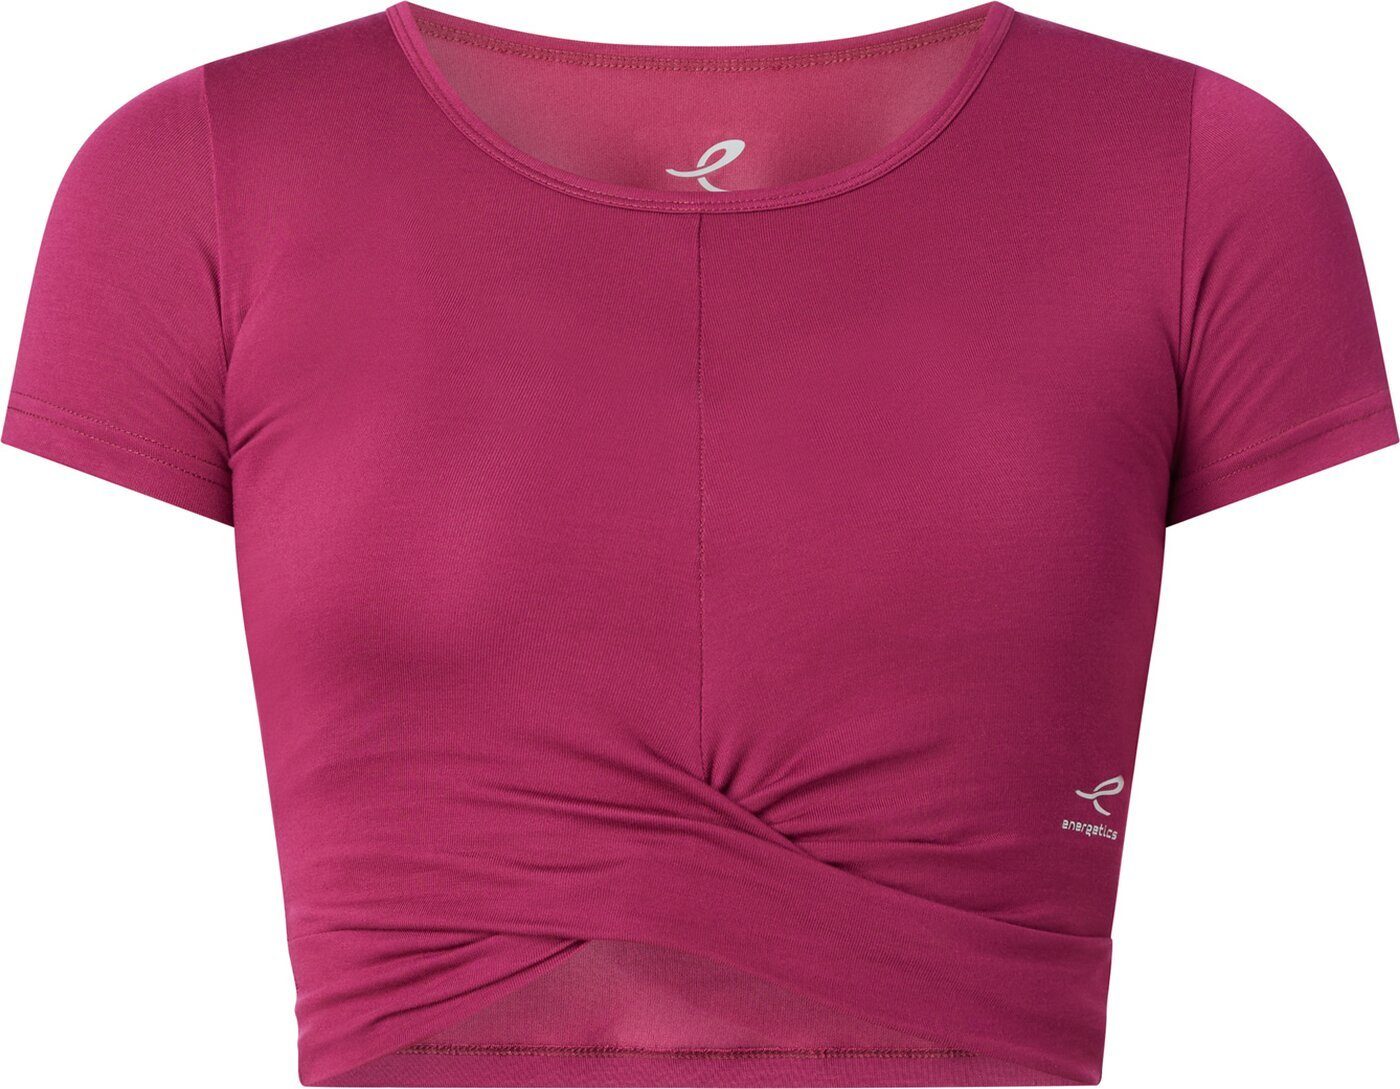 Energetics RED Gesinella WINE Da.-T-Shirt wms Trainingsshirt III